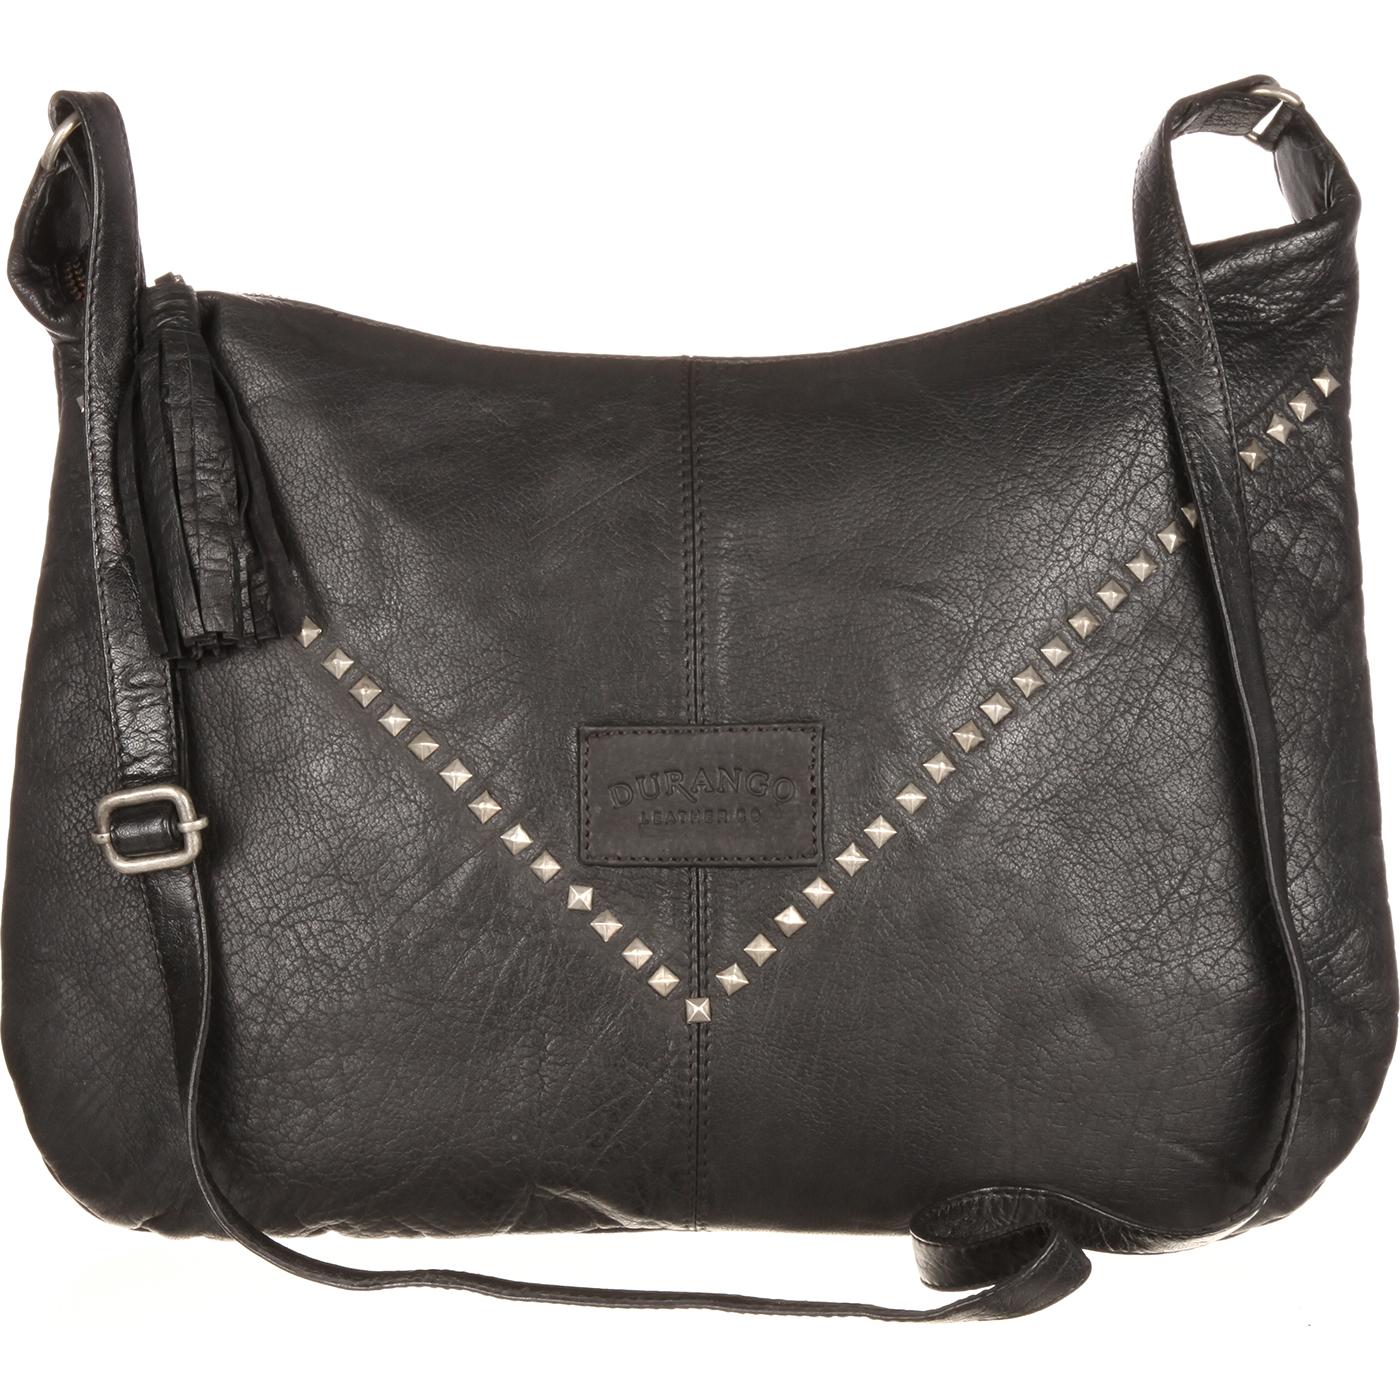 Durango Leather Company Belle Starr Black Hobo Bag, DLC0055